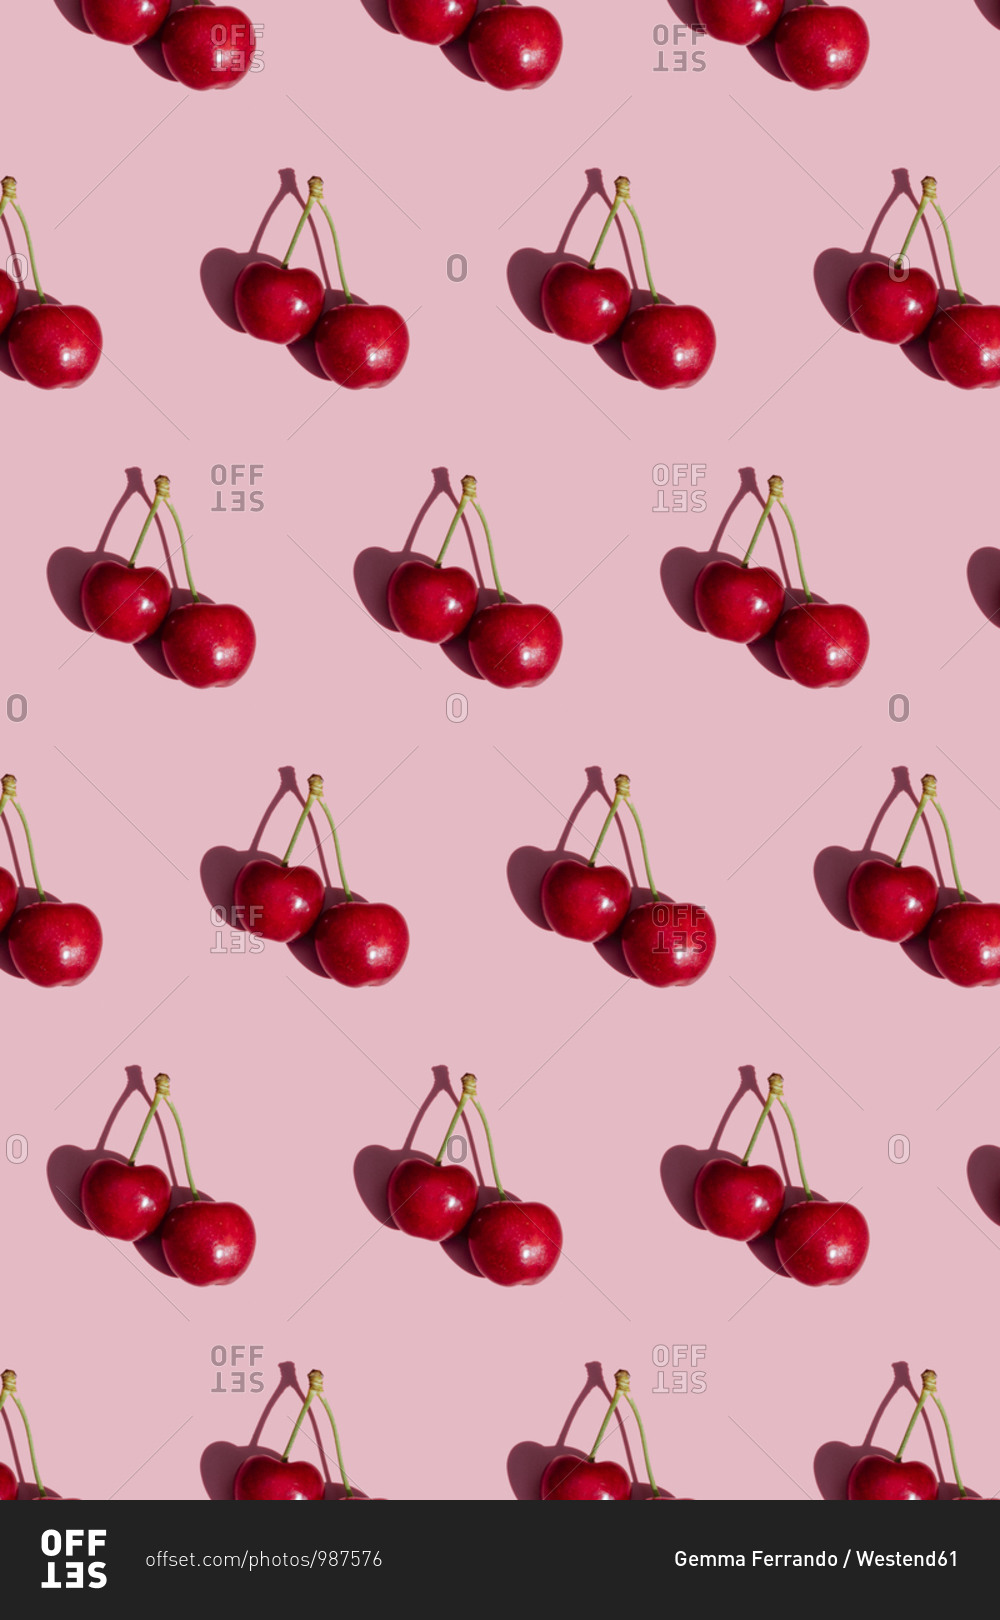 Pattern of fresh cherries on pink background